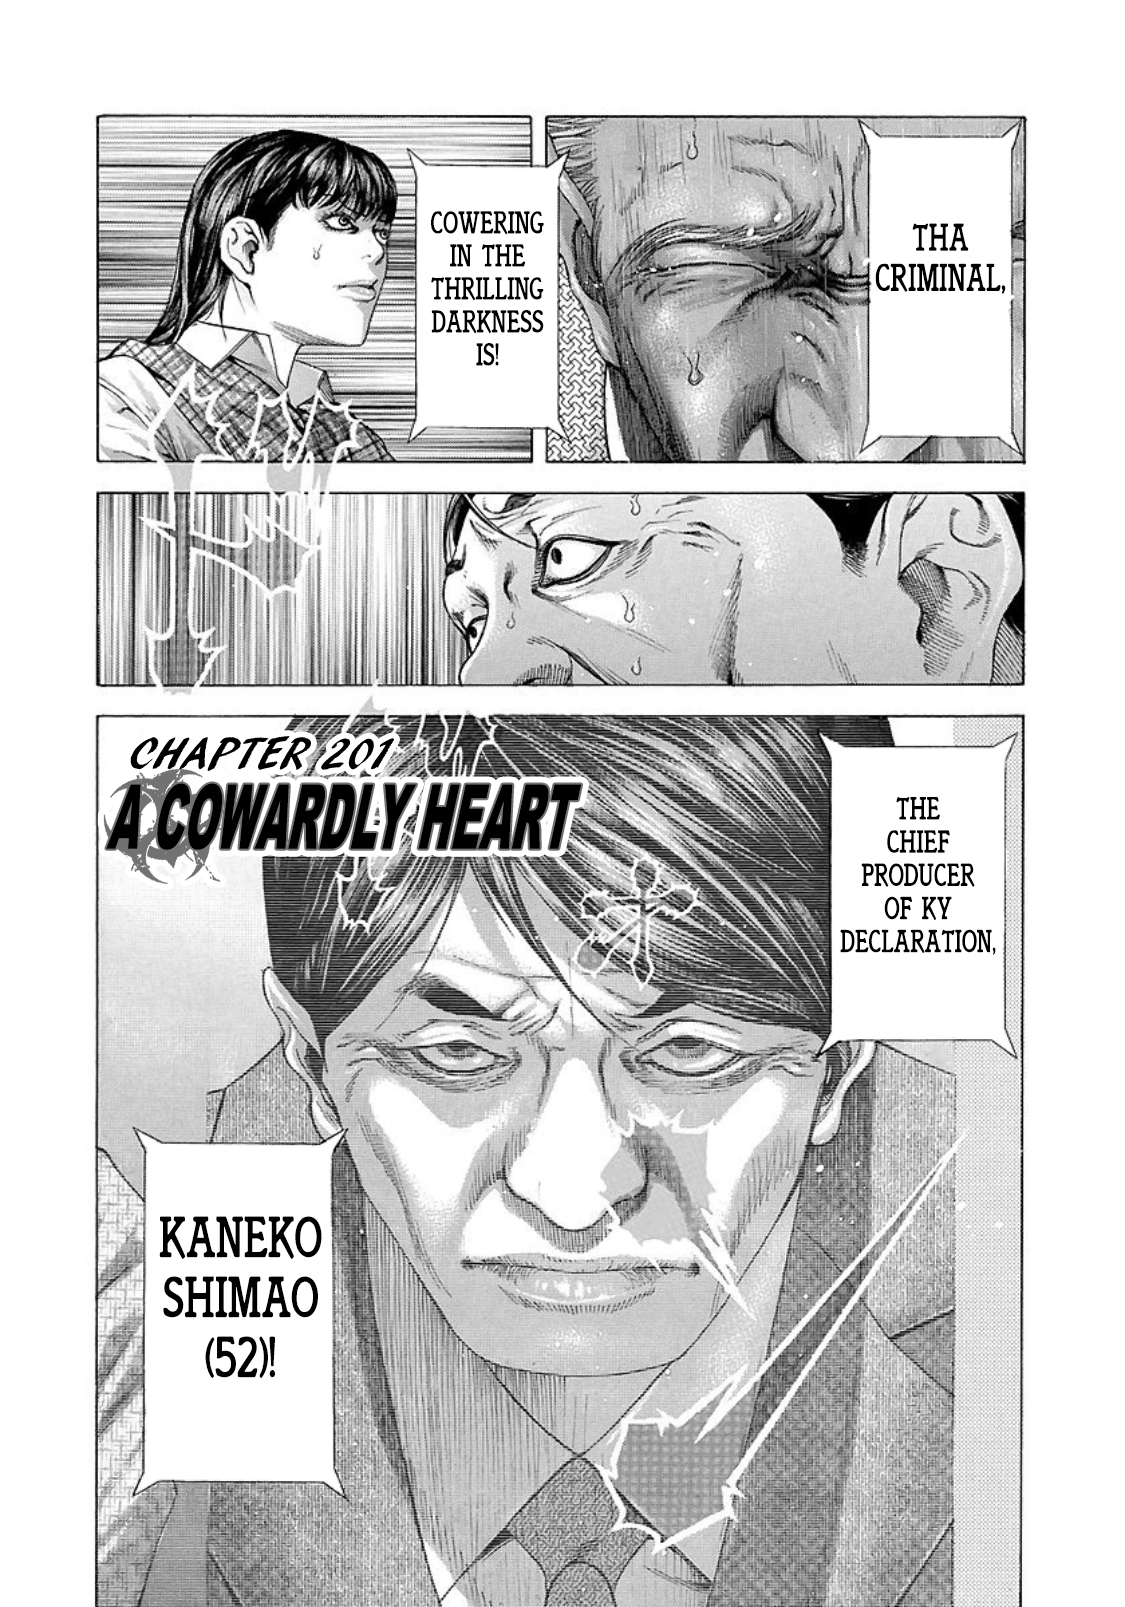 Usogui Vol. 19 Ch. 201 A Cowardly Heart